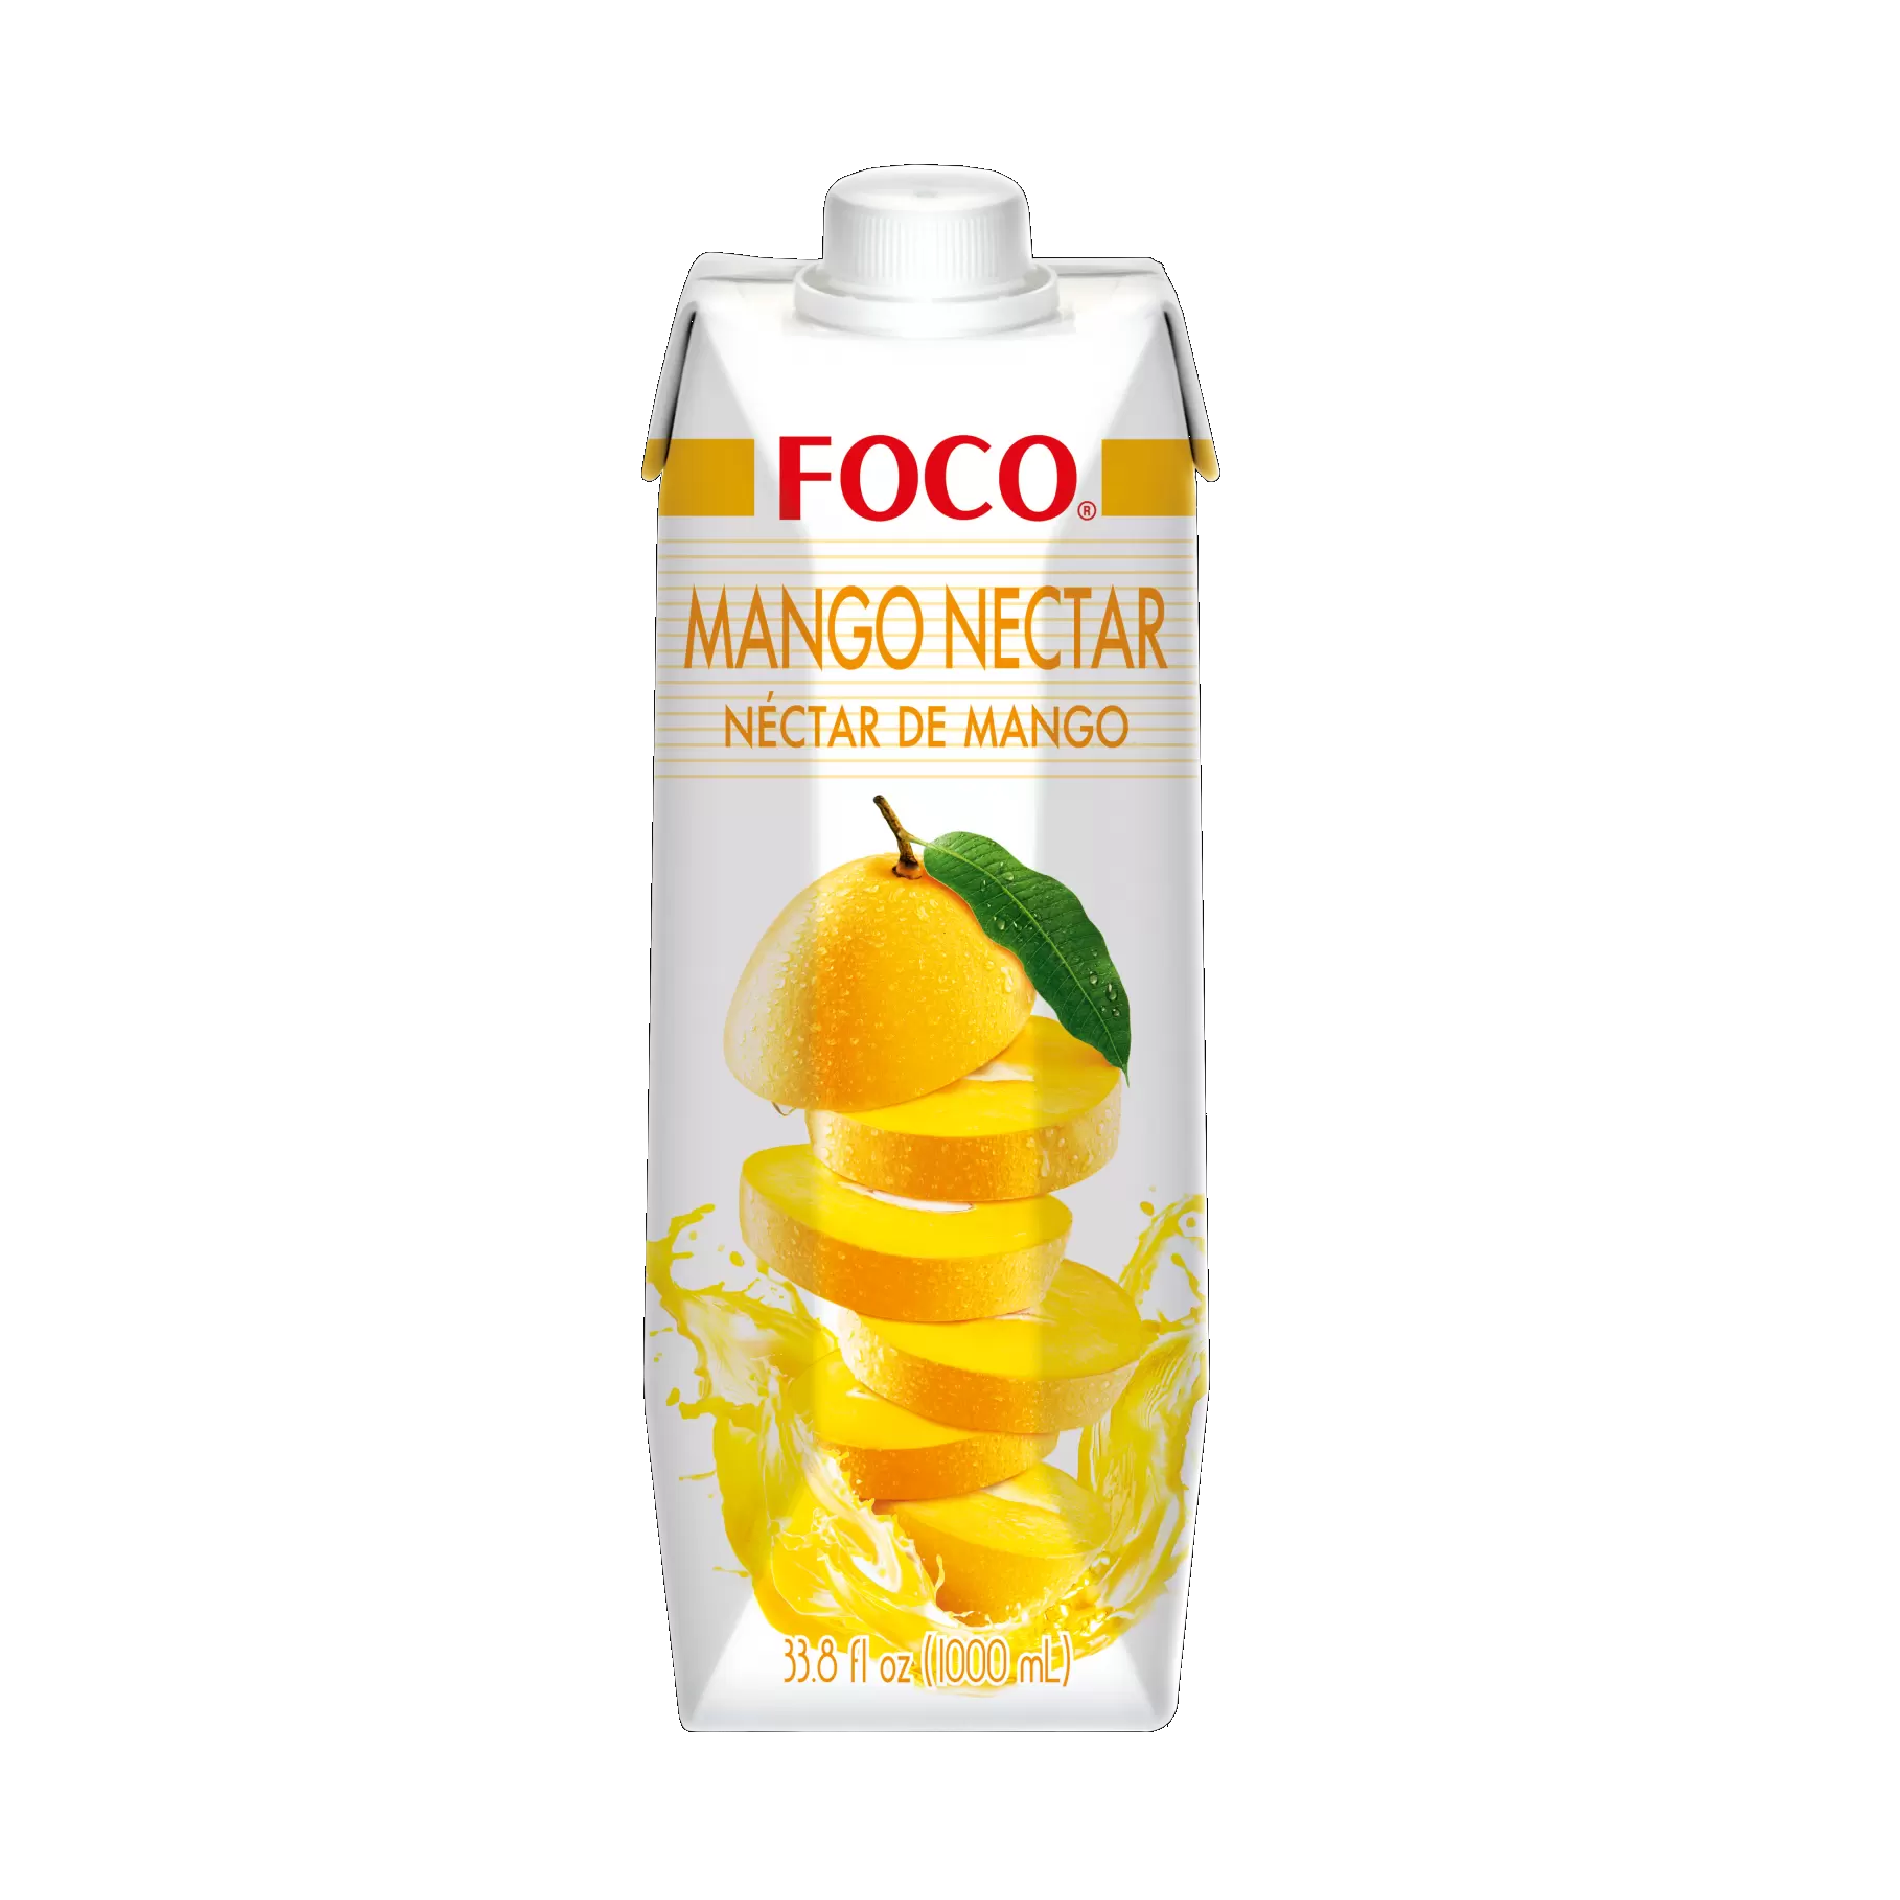 Нектар тела. Нектар манго foco, 1 л. Нектар манго foco, 330 мл.. Нектар foco манго, 0.33 л. Нектар манго (1000 мл).